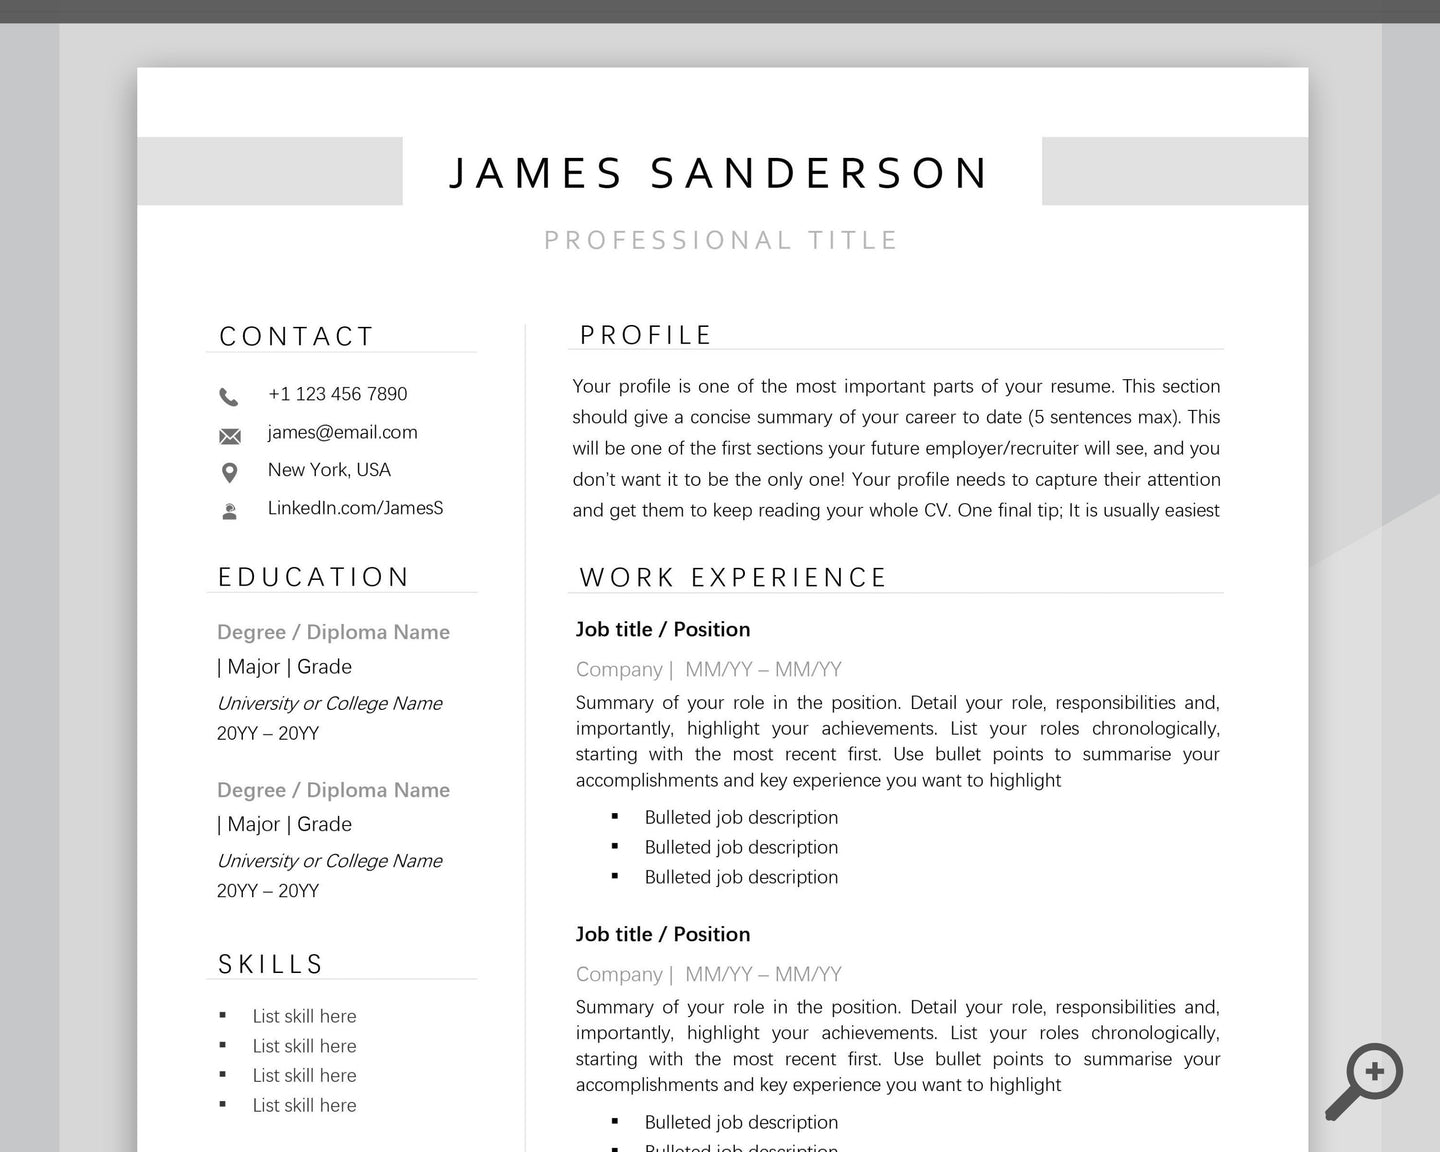 Professional Resume Template Word. CV Template Professional, Modern Executive Resume Template, Clean, Minimalist Resume, Free Docs Bundle | Style 7